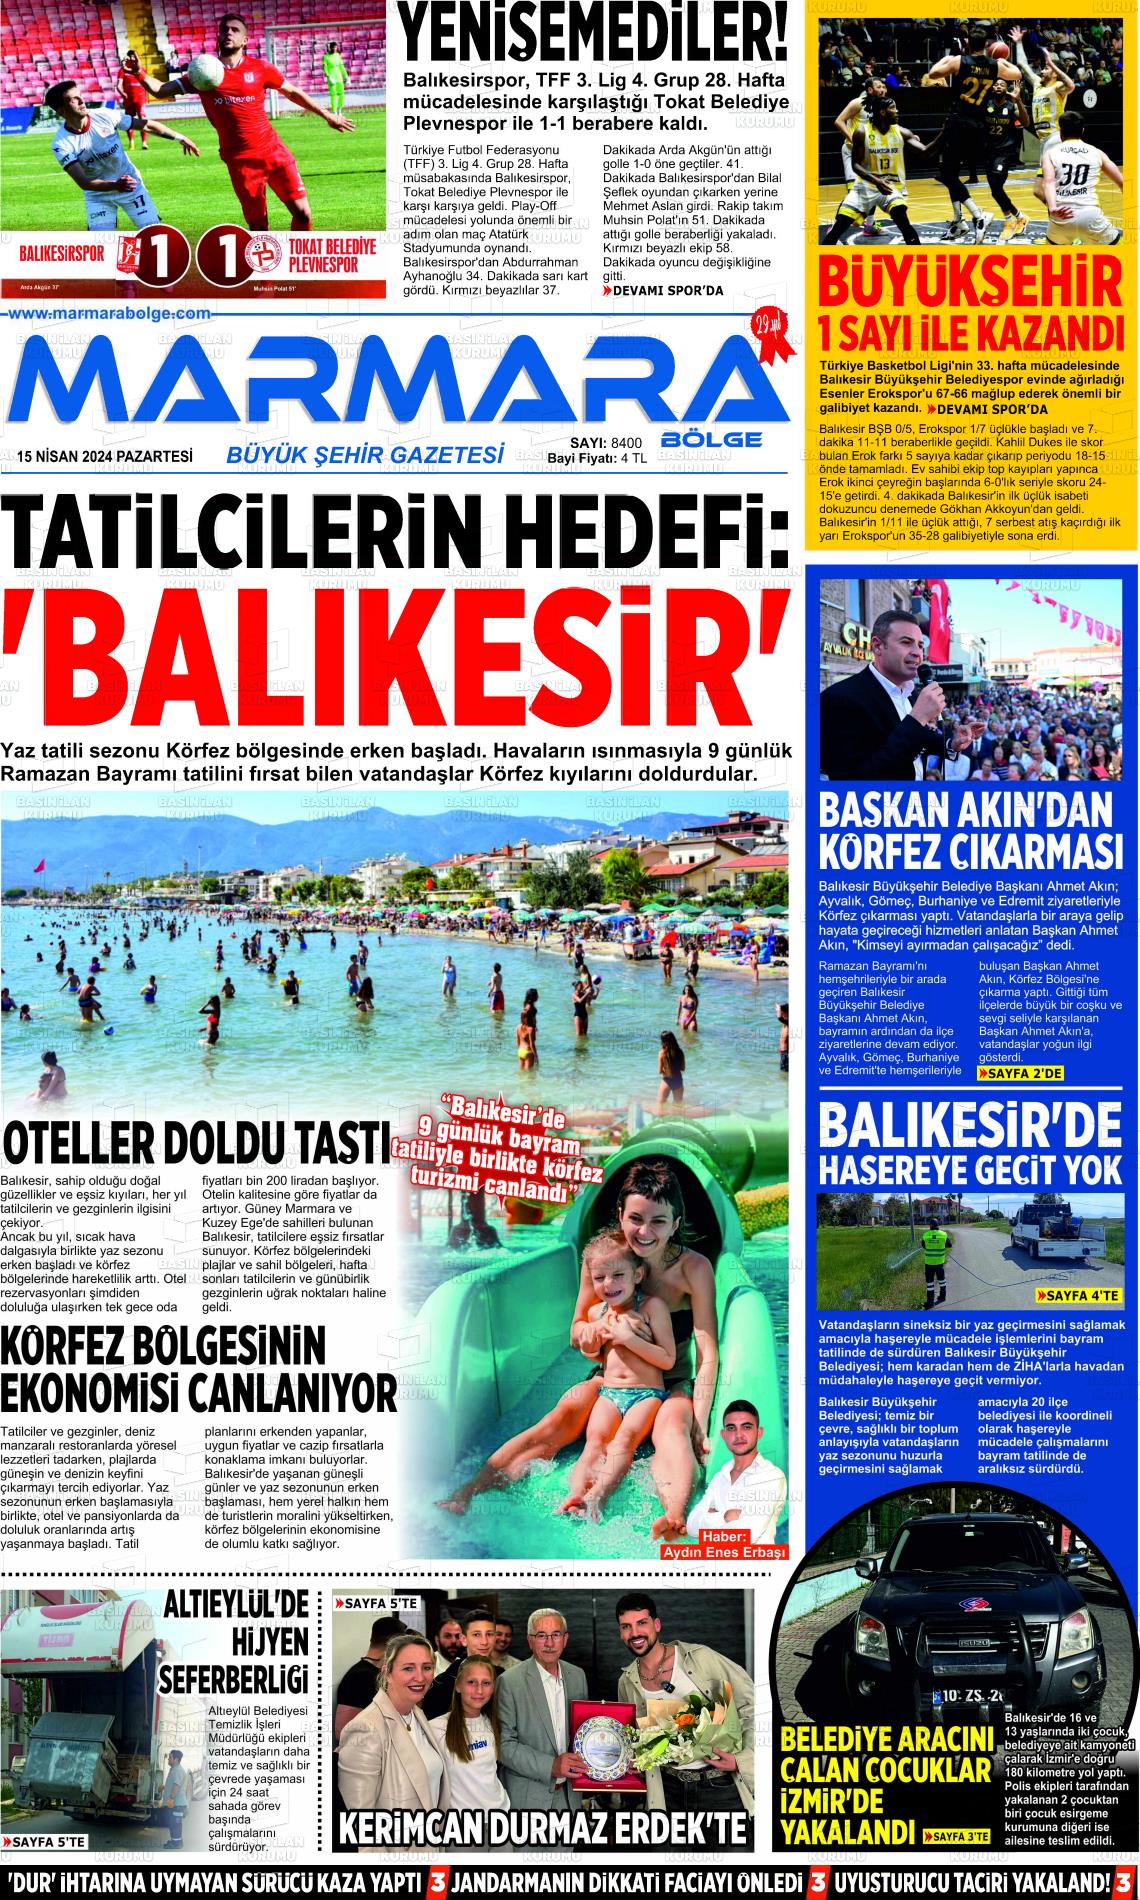 15 Nisan 2024 Marmara Bölge Gazete Manşeti